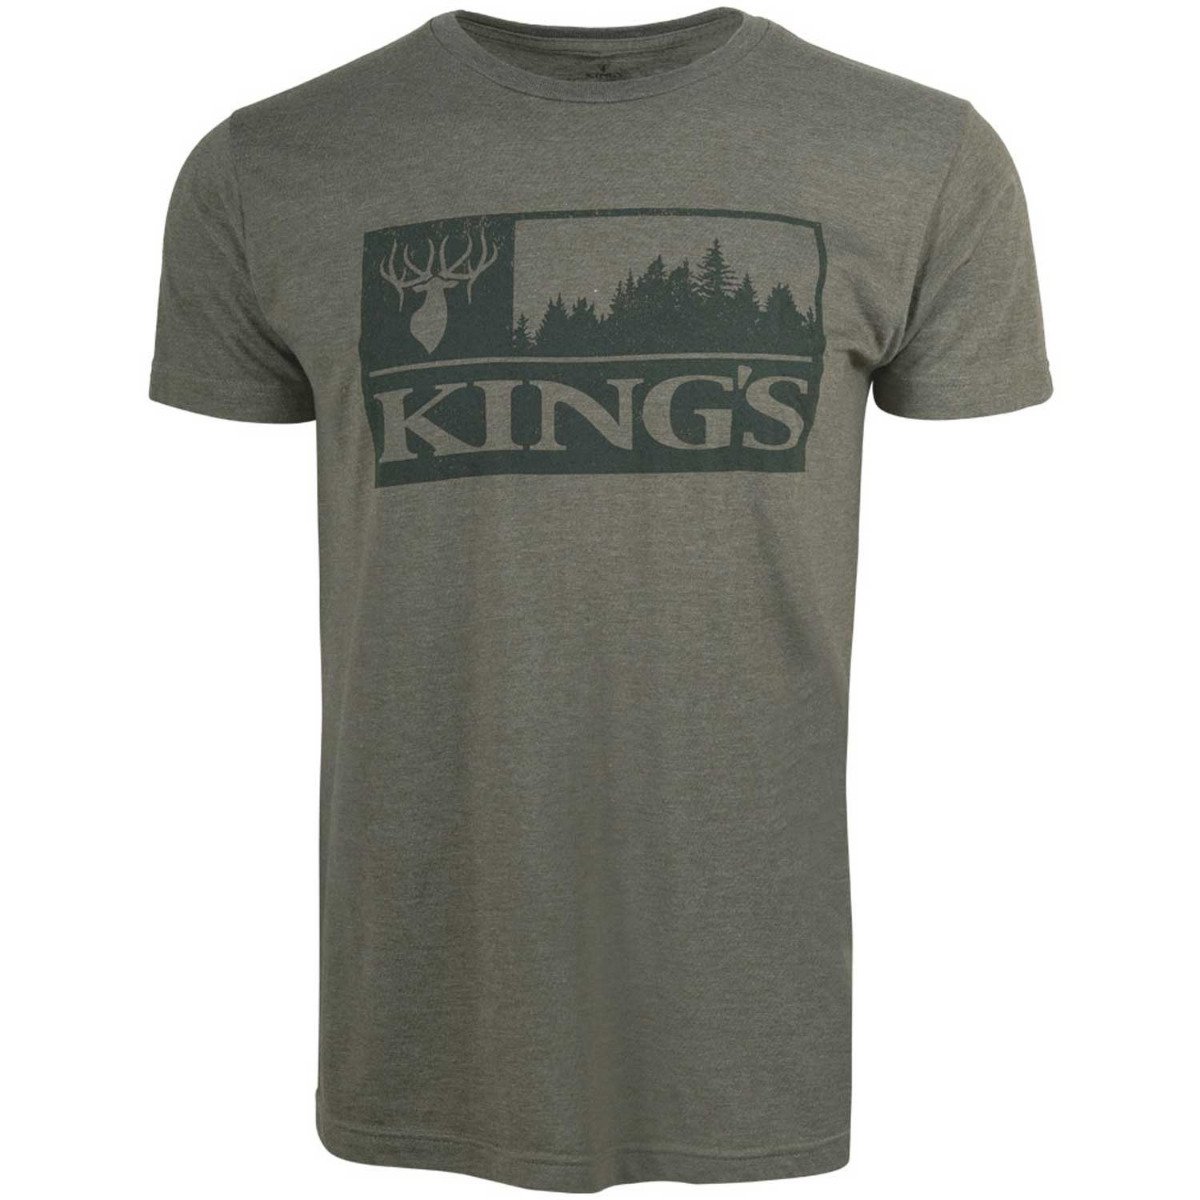 King's Camo Three Box Short Sleeve Shirt